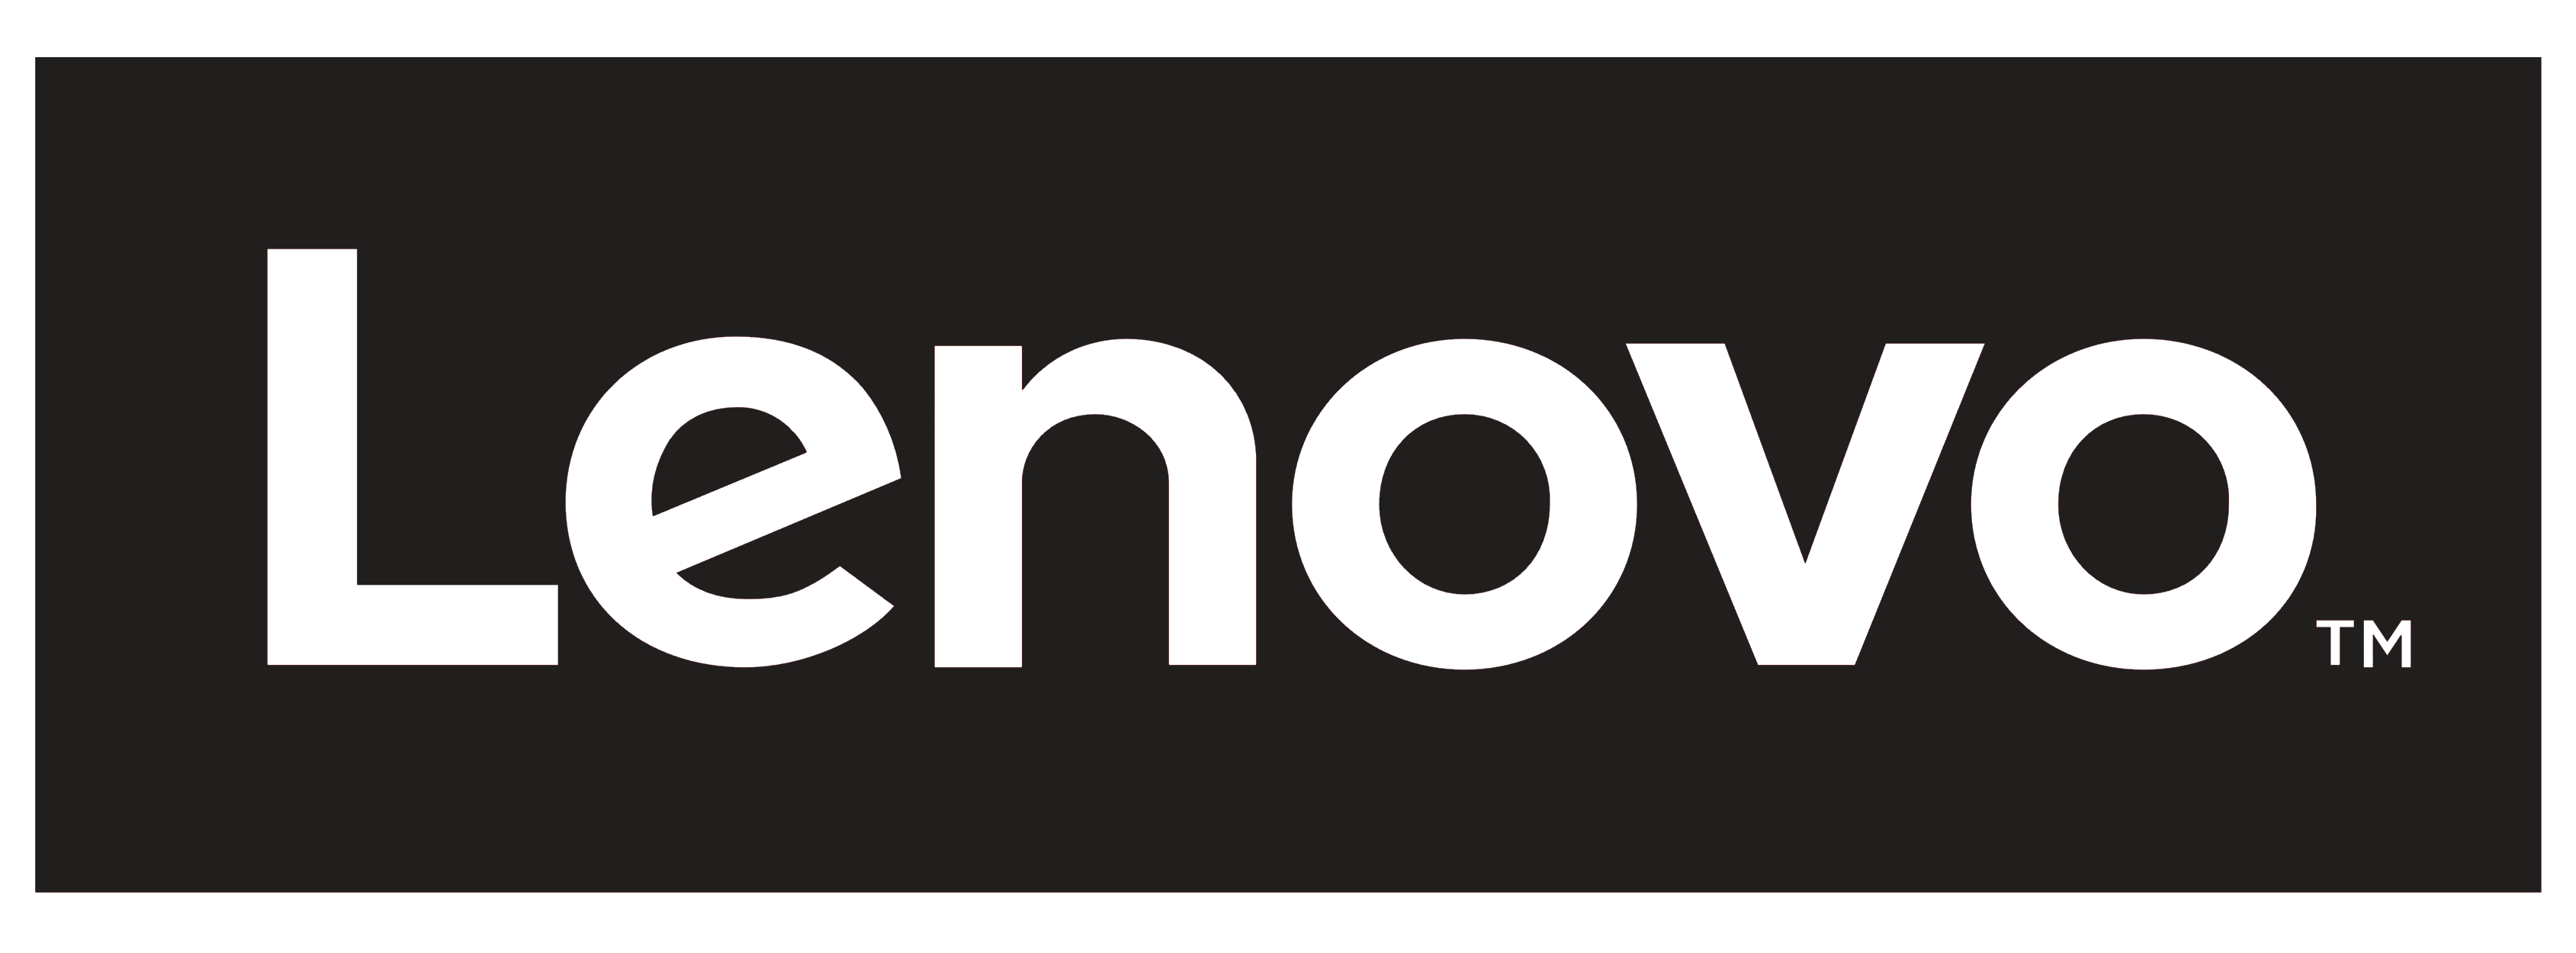 Lenovo Logo Png Download - 96